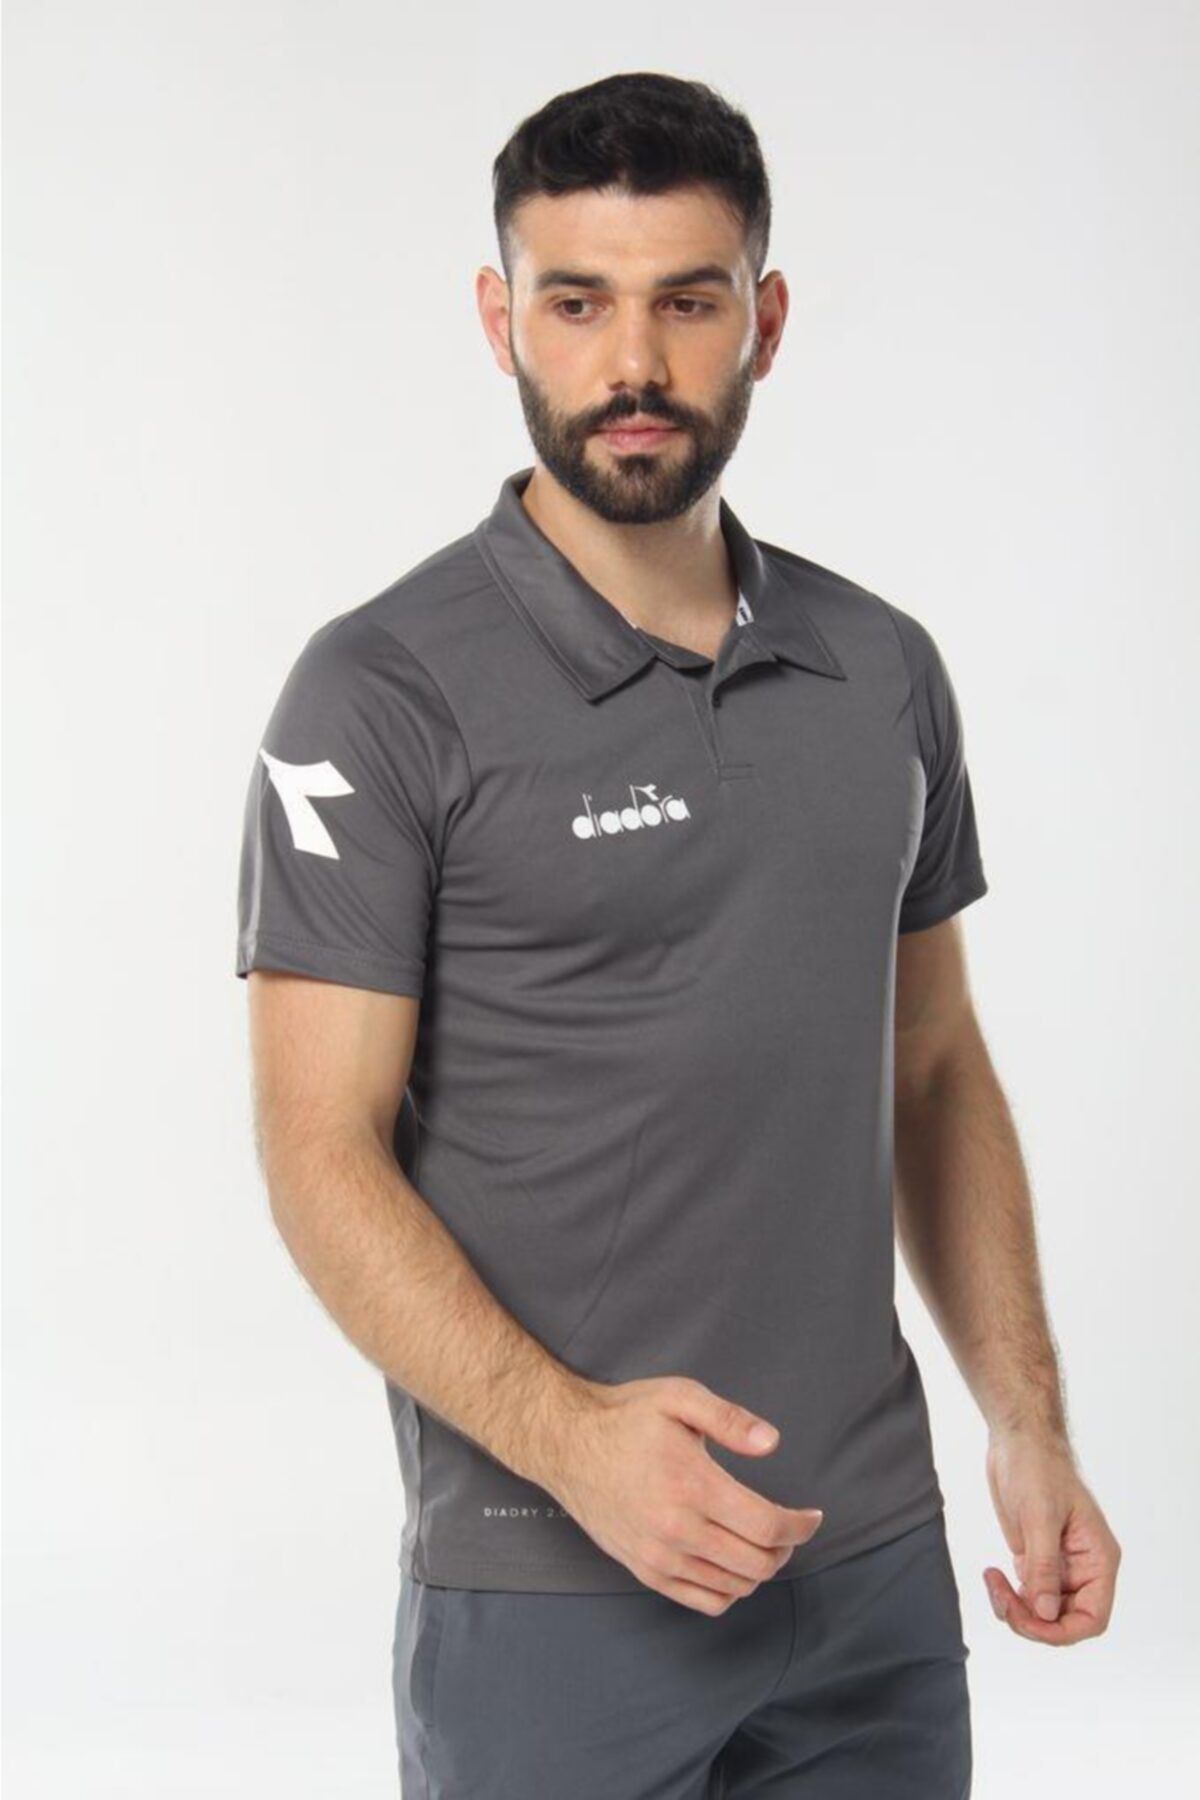 Diadora Nacce Antrasit Polo Yakalı T-shirt - 1tsr06-antrasit